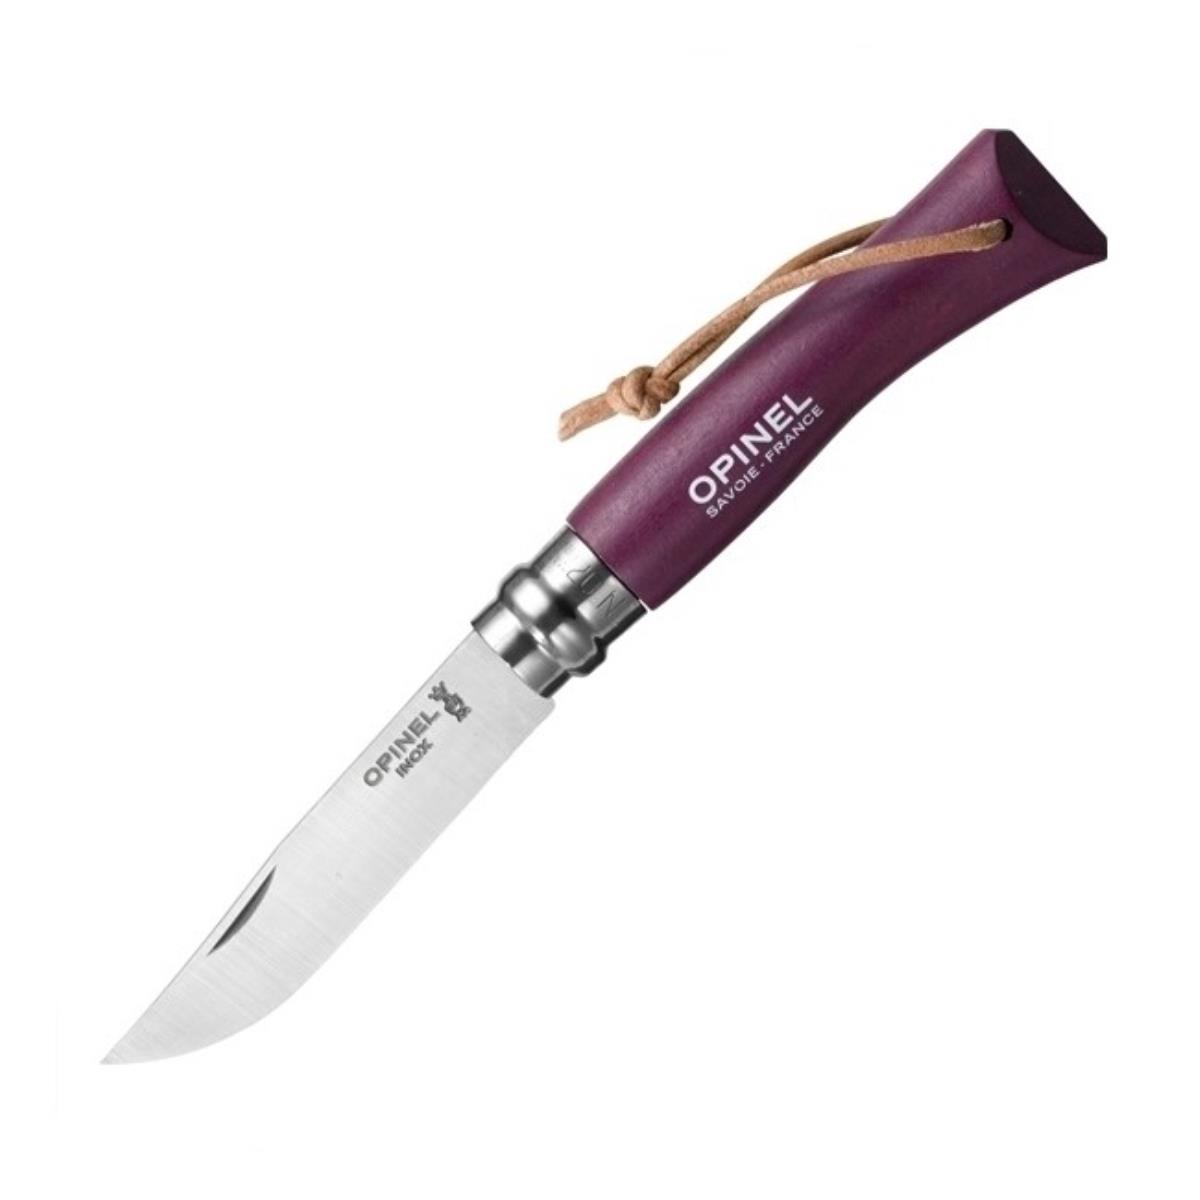 Нож №7 VRI Colored Tradition нерж. сталь, рукоять граб,  клинок 8см, темляк (слива) OPINEL нож сапсан граб 100х13м